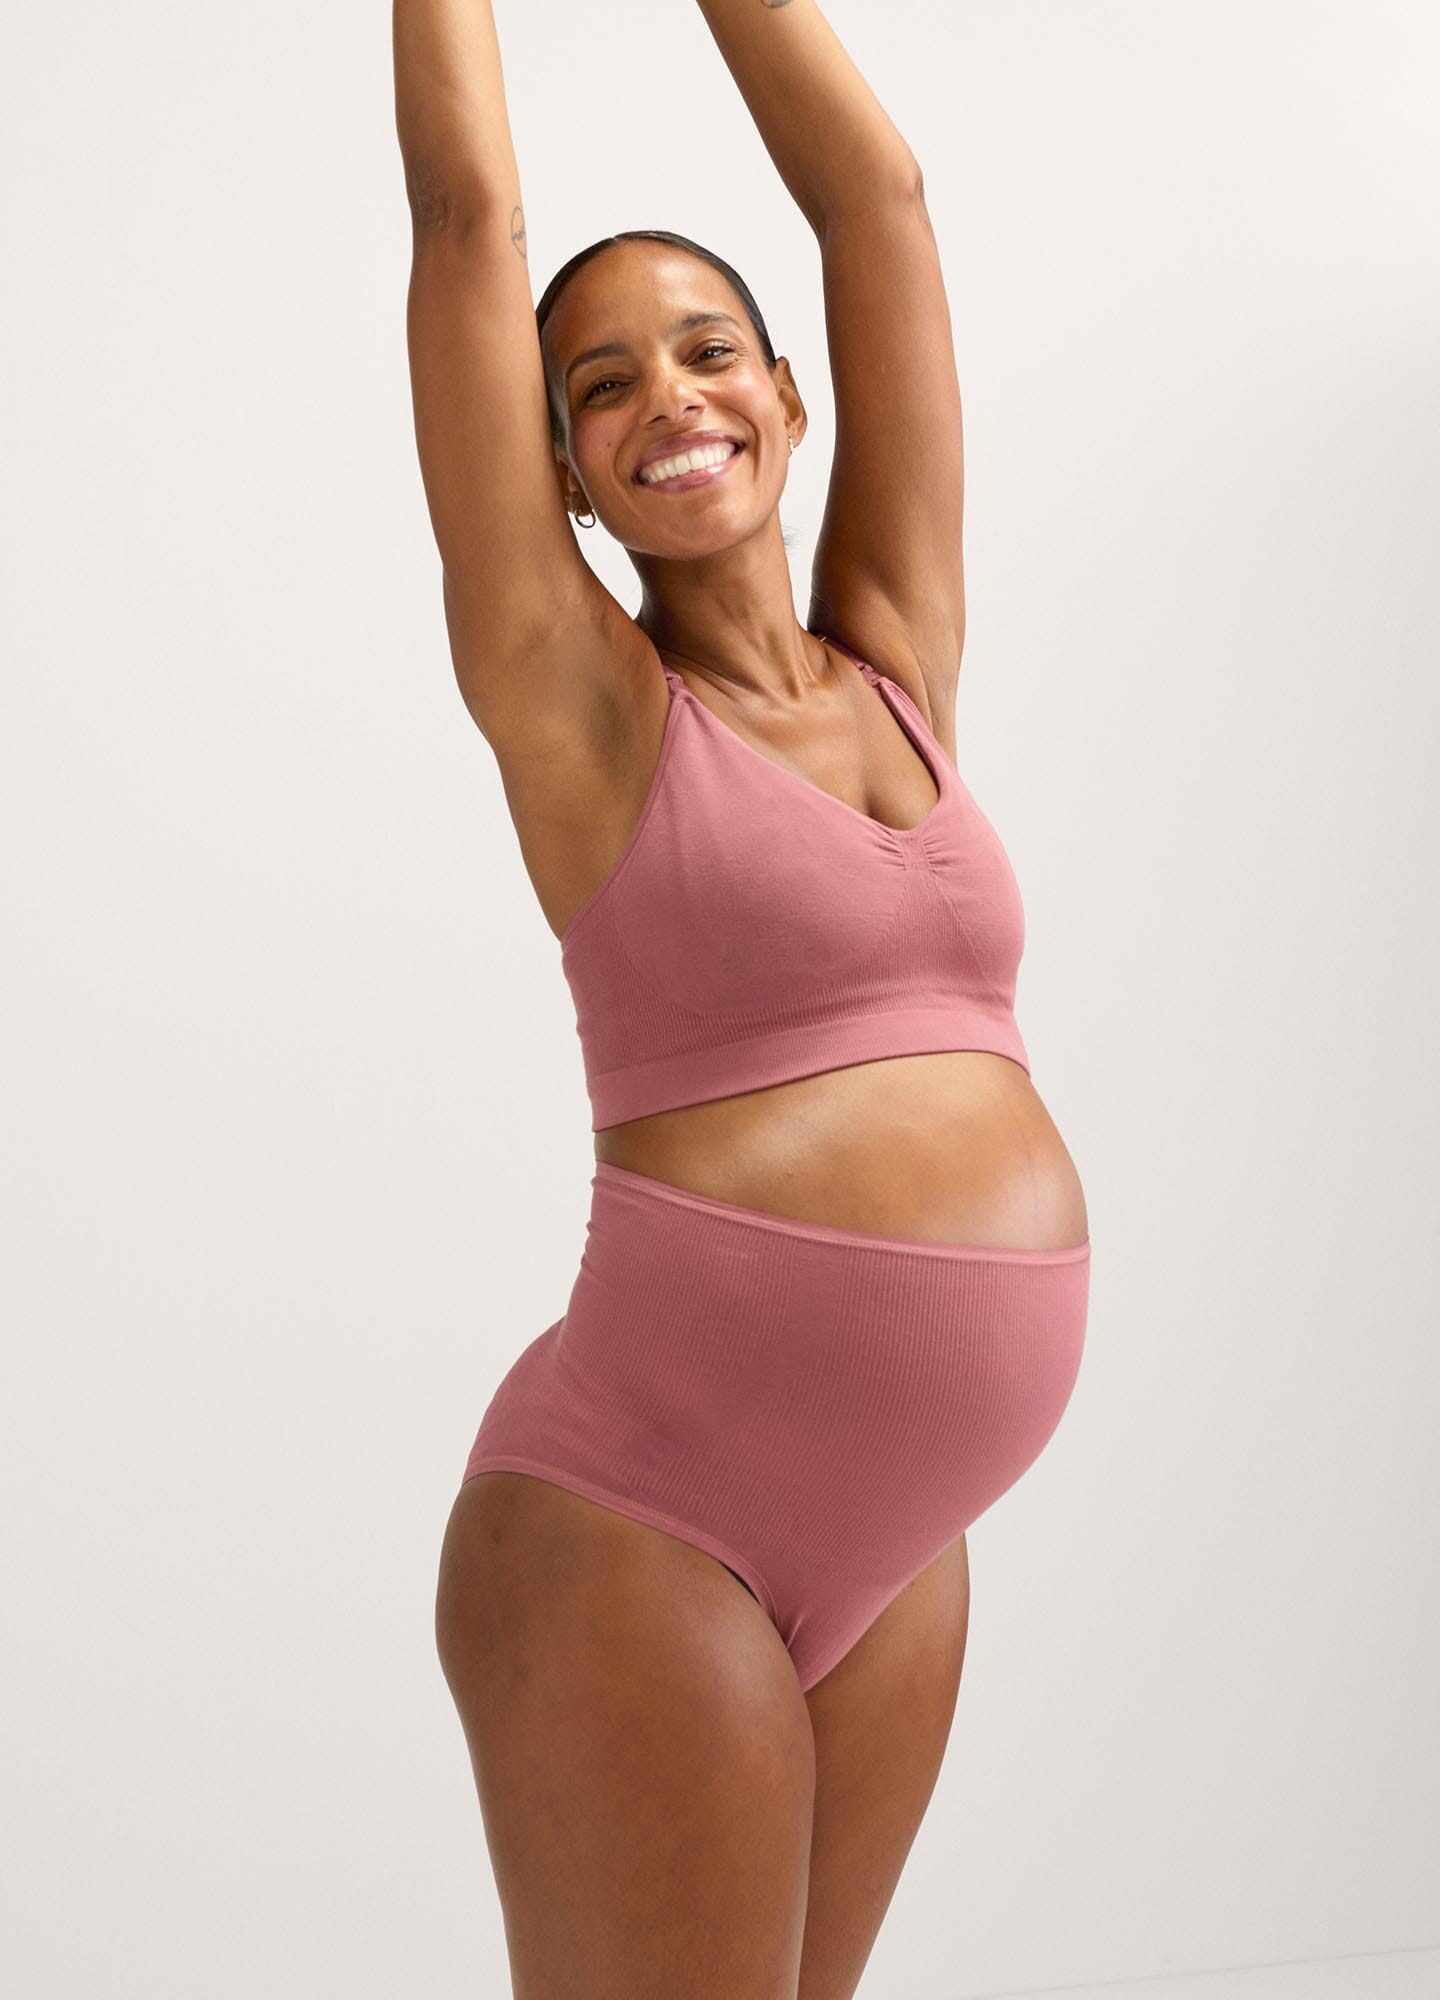 jovati Comfortable Underwear Women Women Feeding Nursing Pregnant Maternity  Bra Breastfeeding Underwear